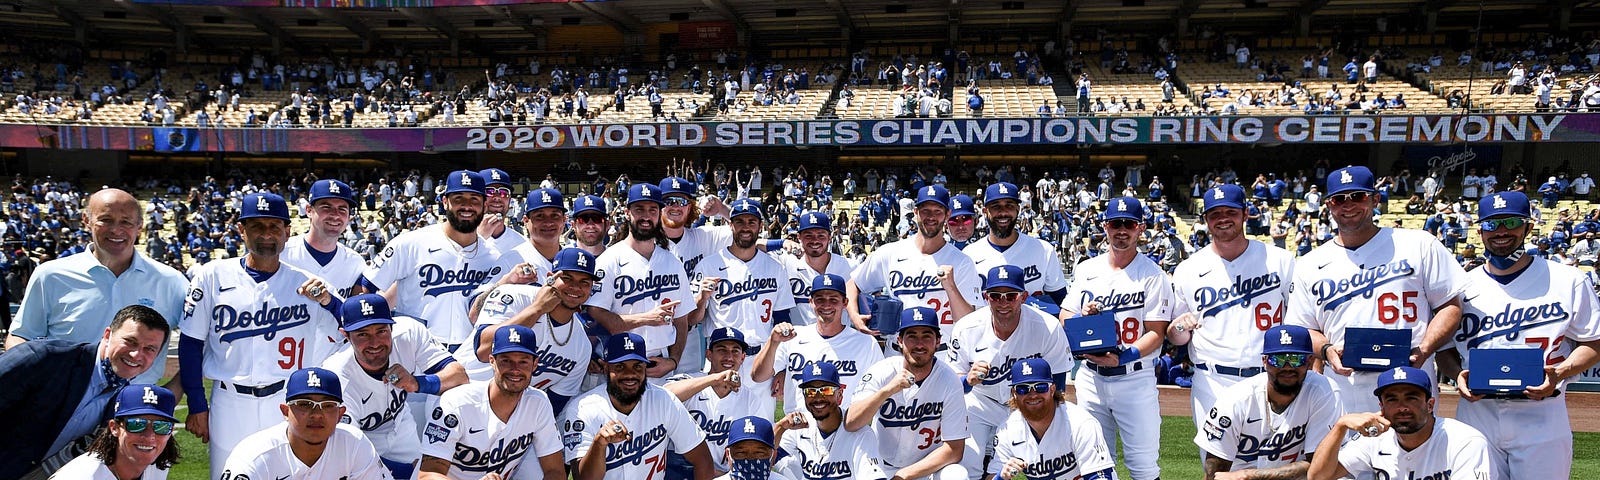 Dodgers receive their 2020 World Series rings, by Rowan Kavner